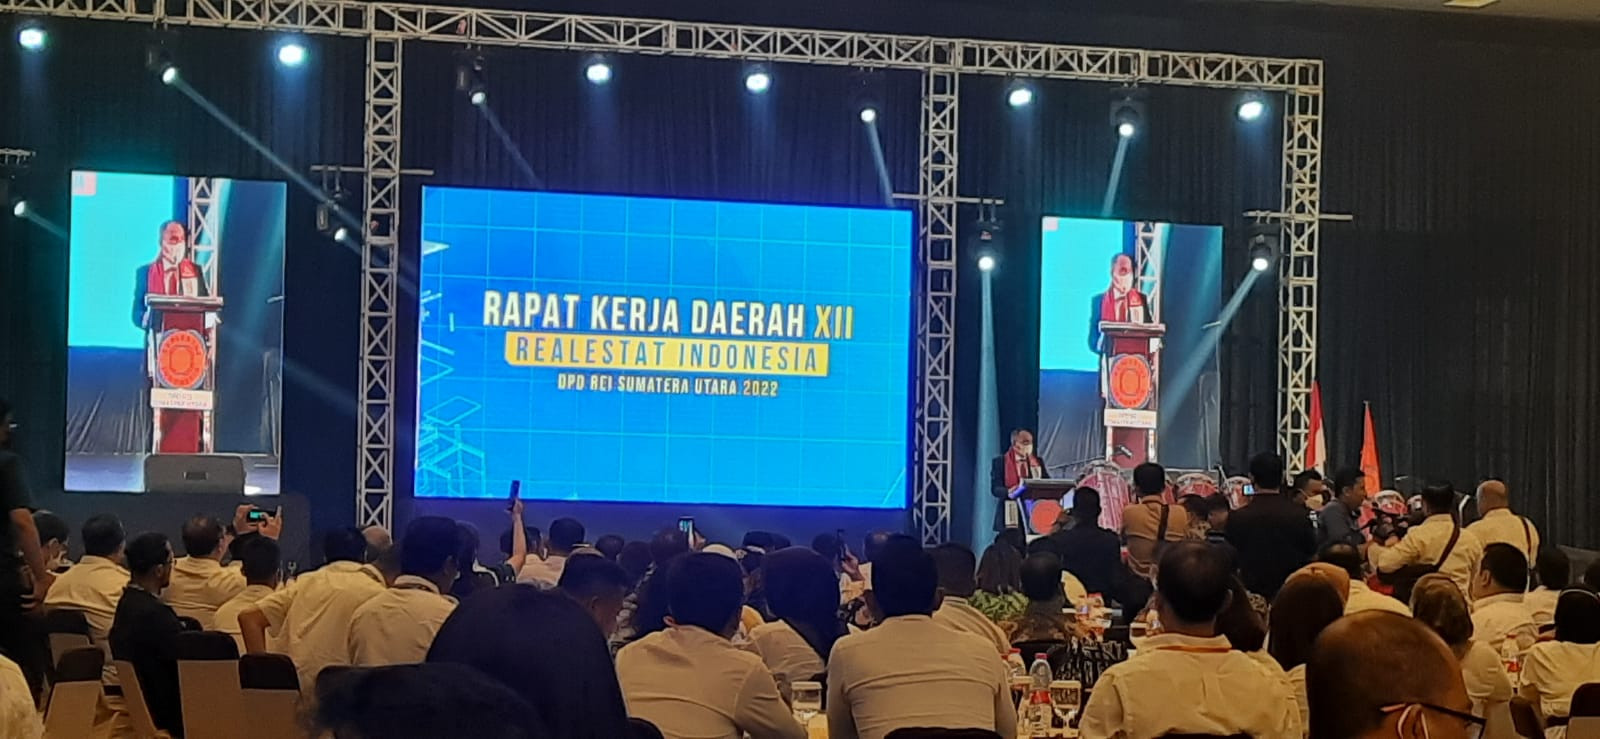 Rapat Kerja Daerah XII Realestad Indonesia DPD REI Sumatera Utara 2022